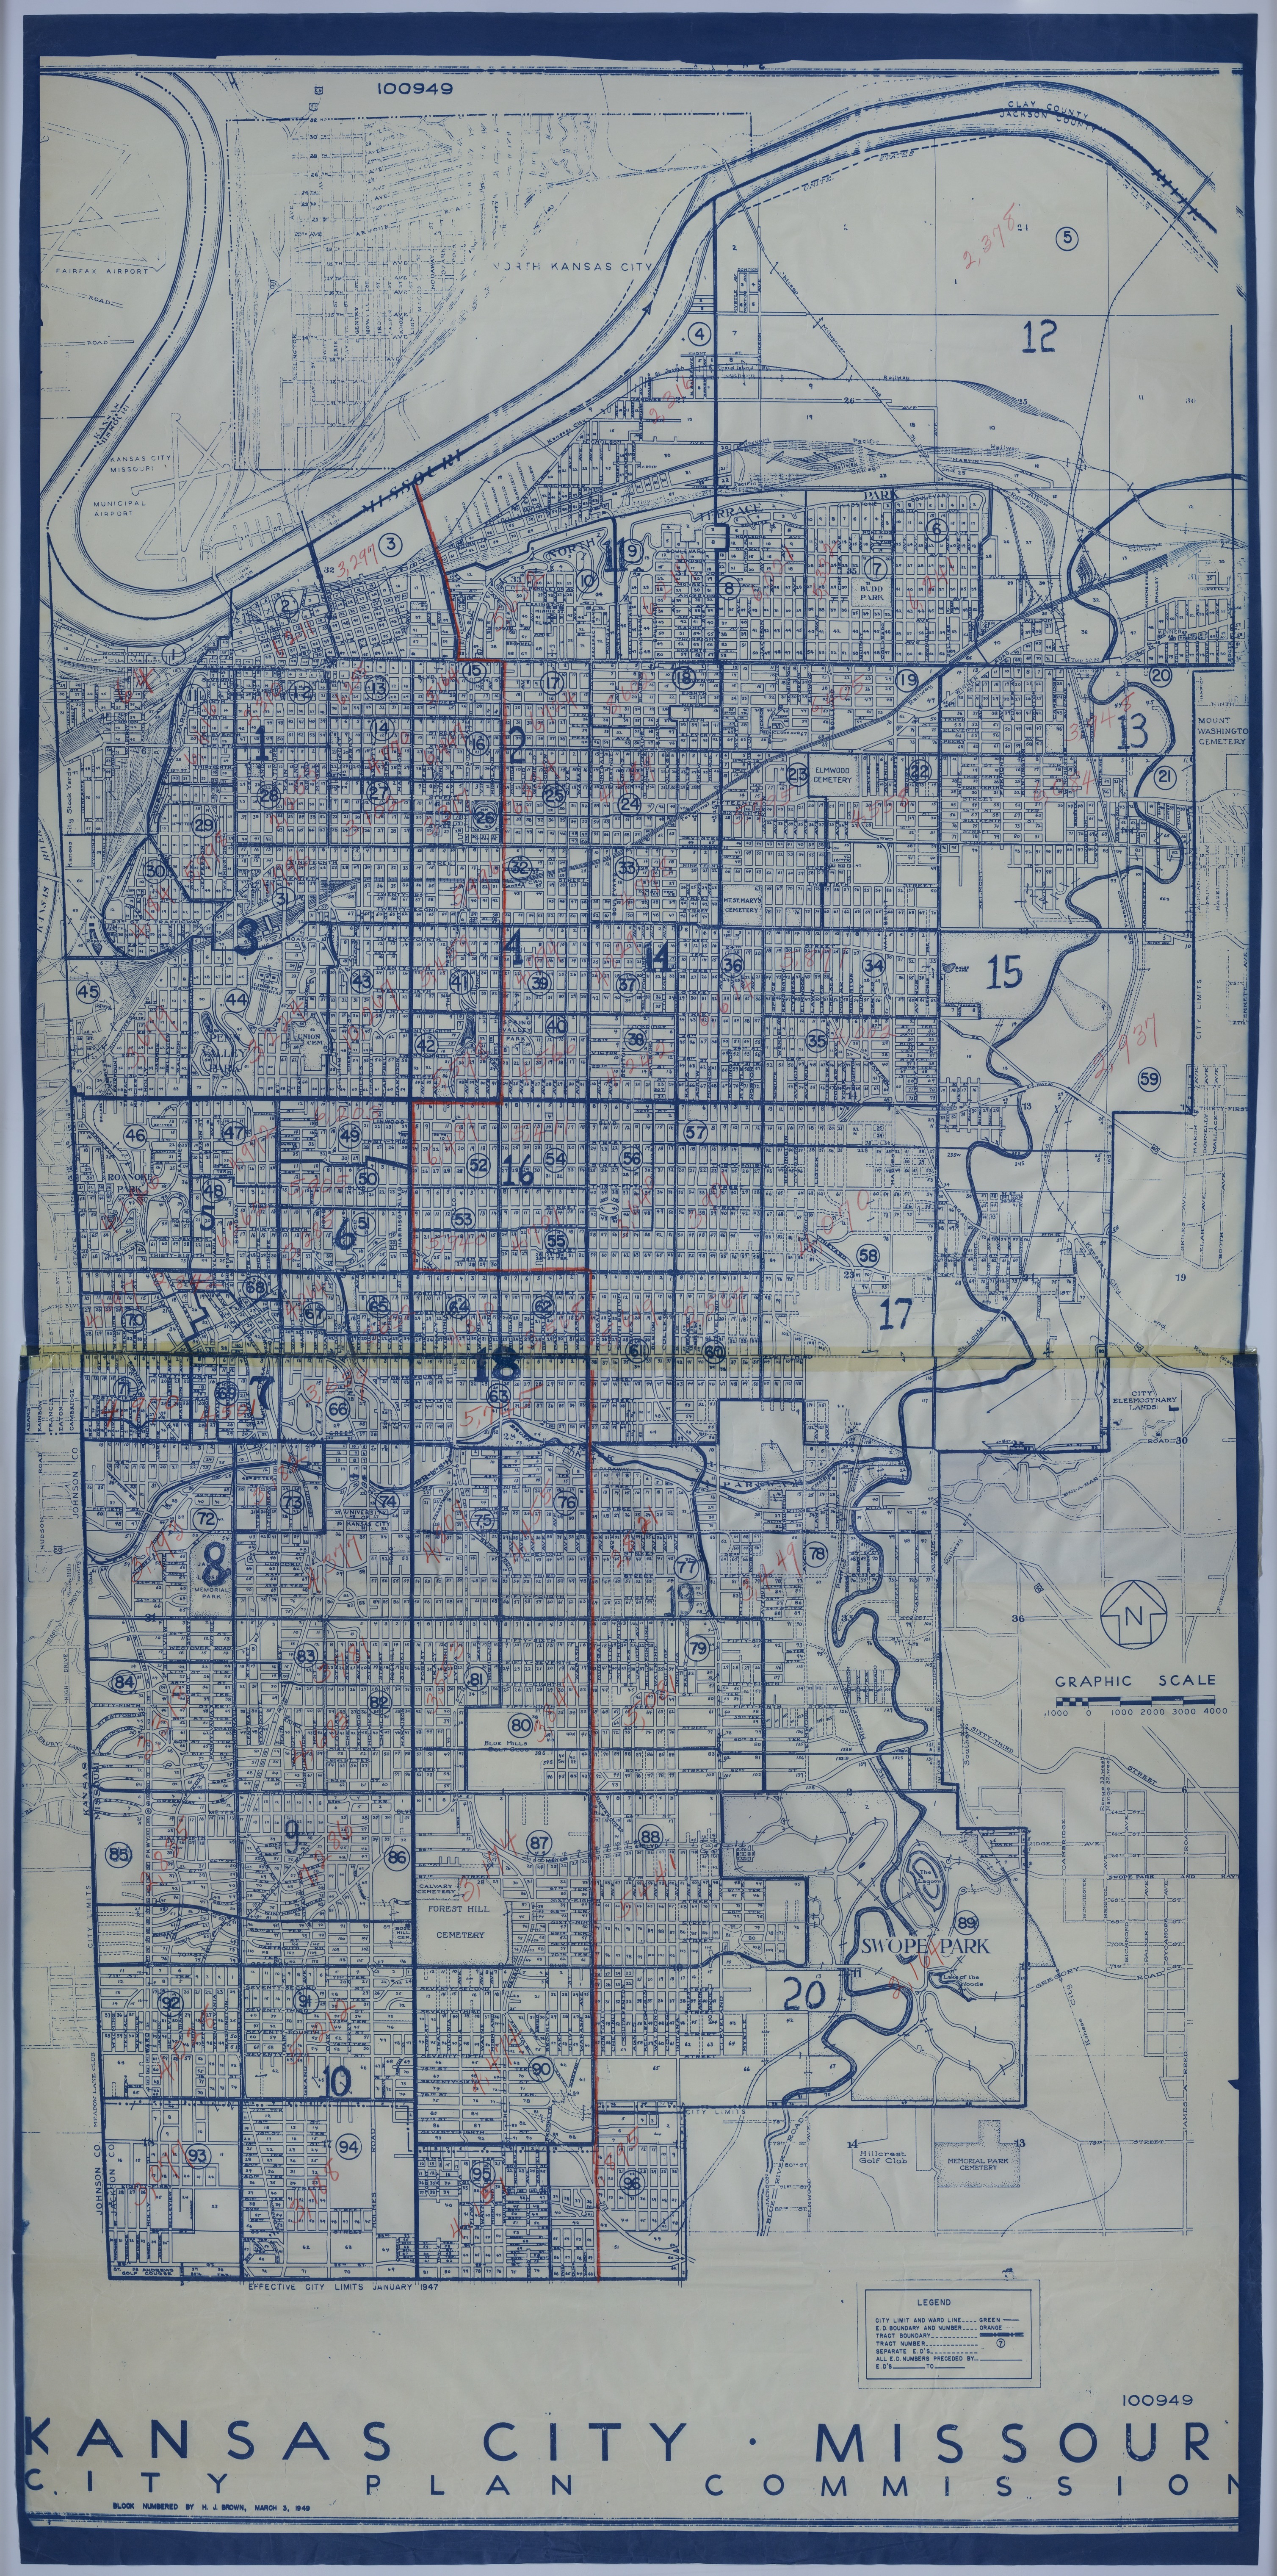 Map of Kansas City, Missouri Redistricting